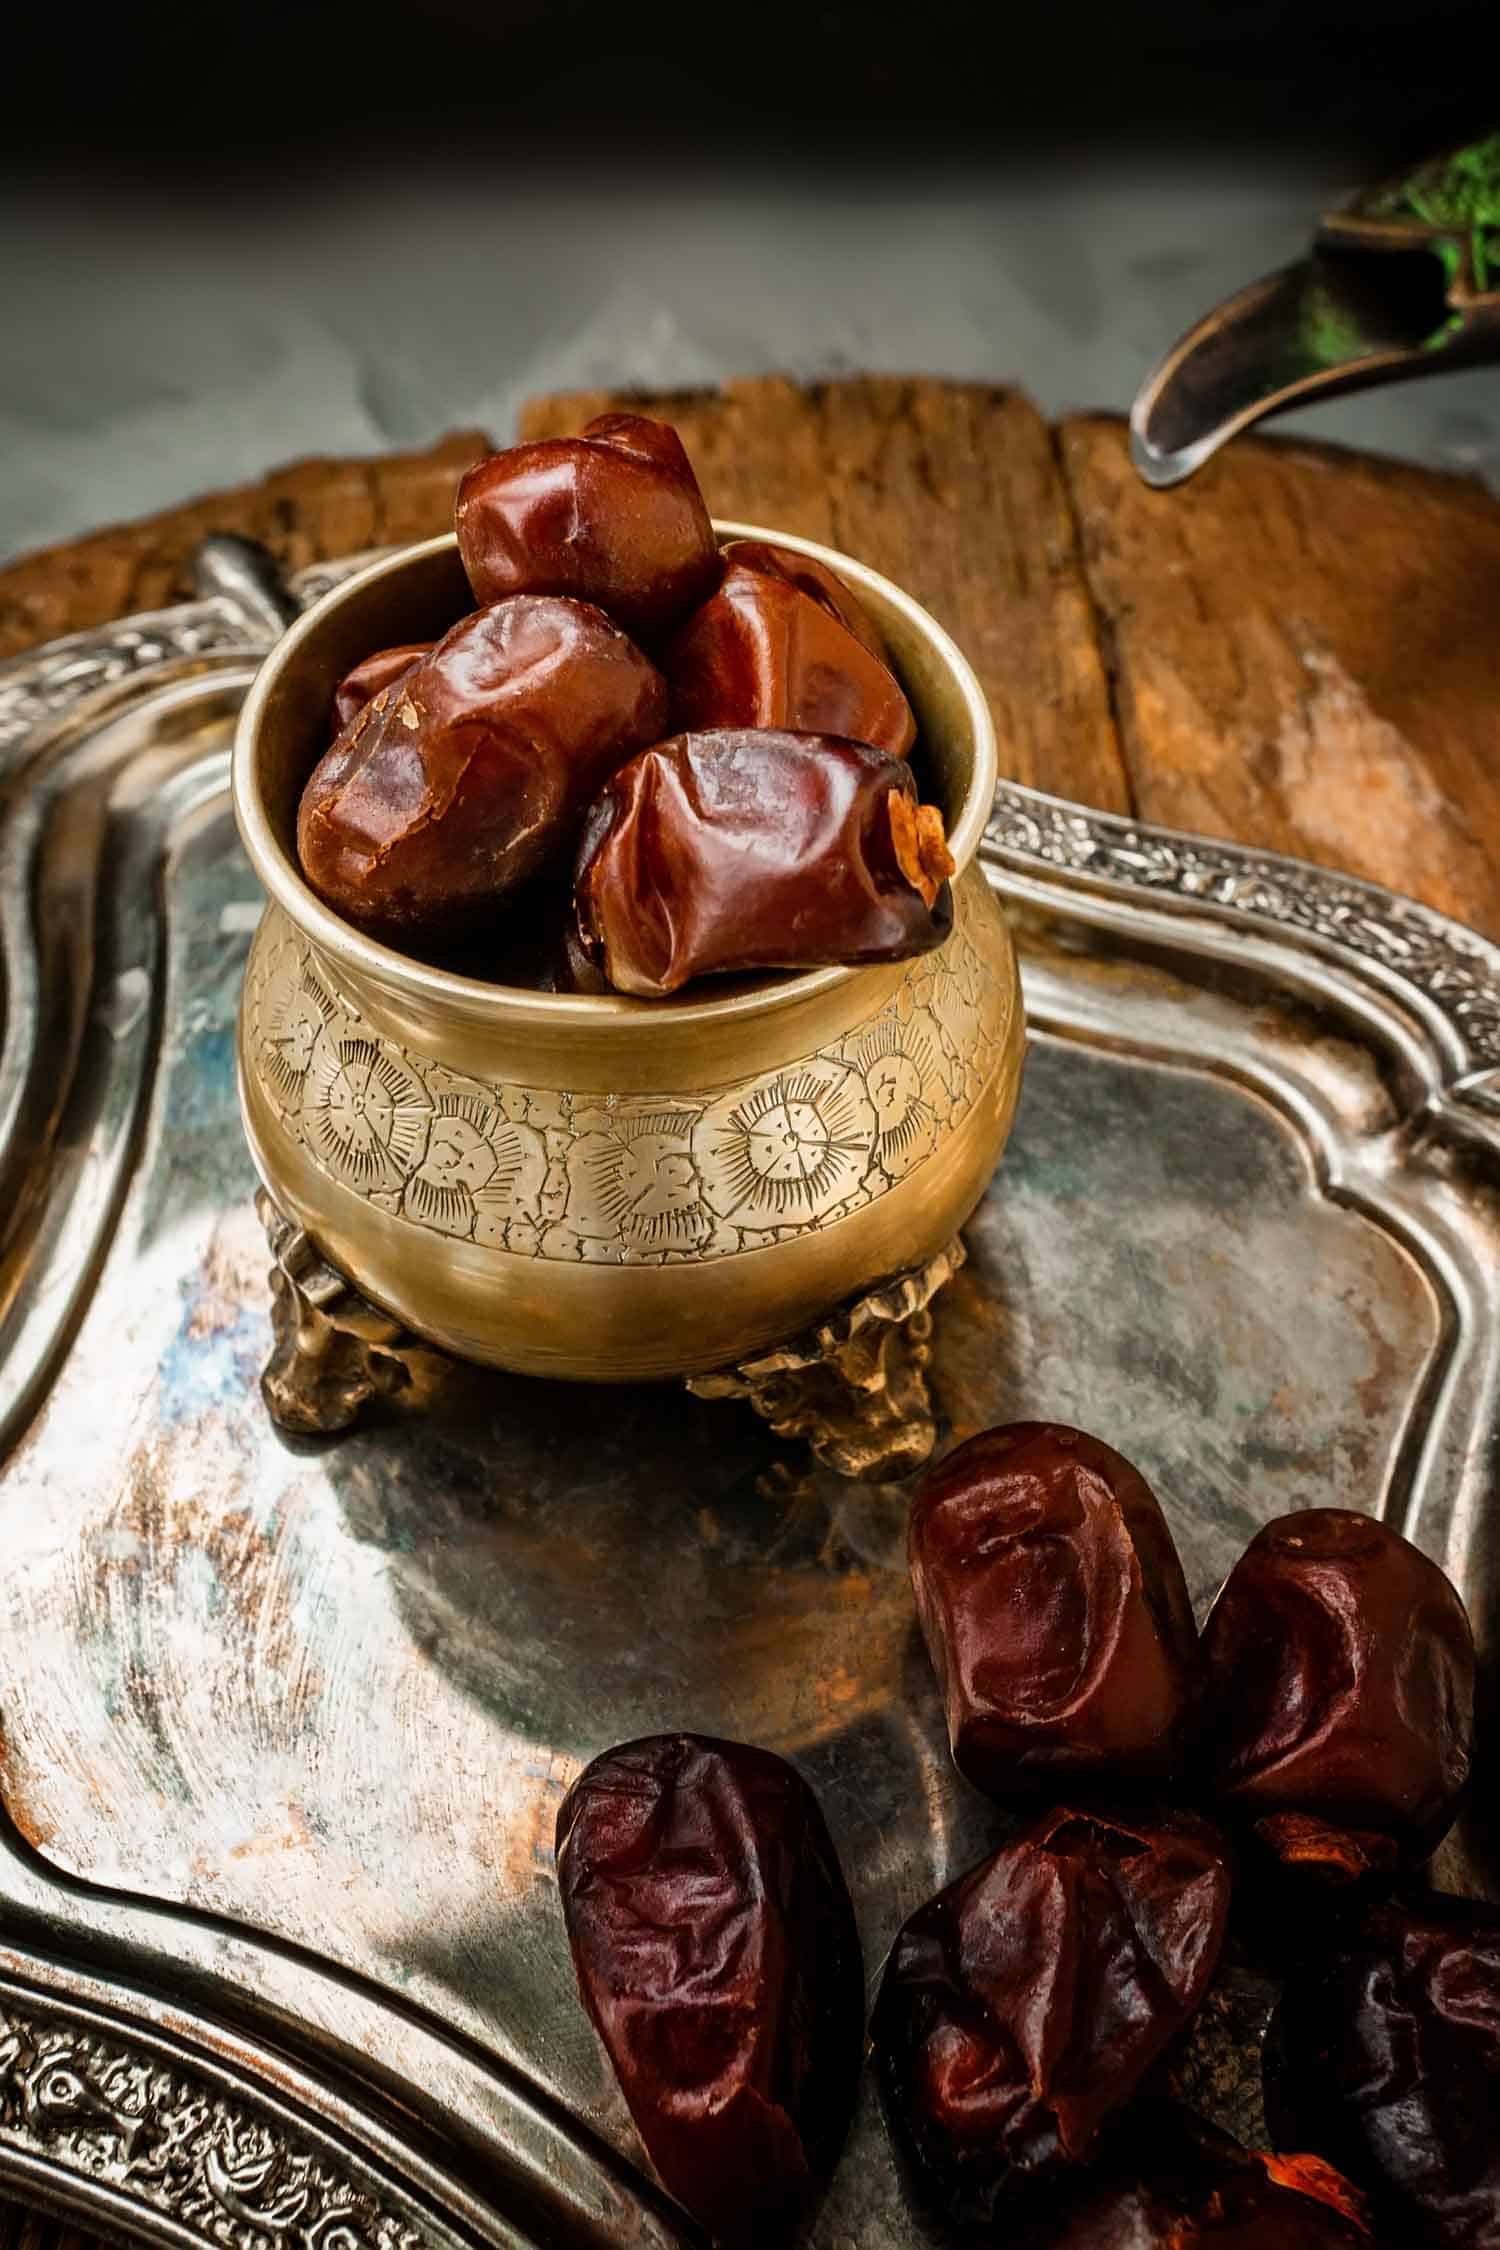 Dried date palm fruits or kurma, ramadan food. Beautiful bowl full of date fruits symbolizing Ramadan. Close -up